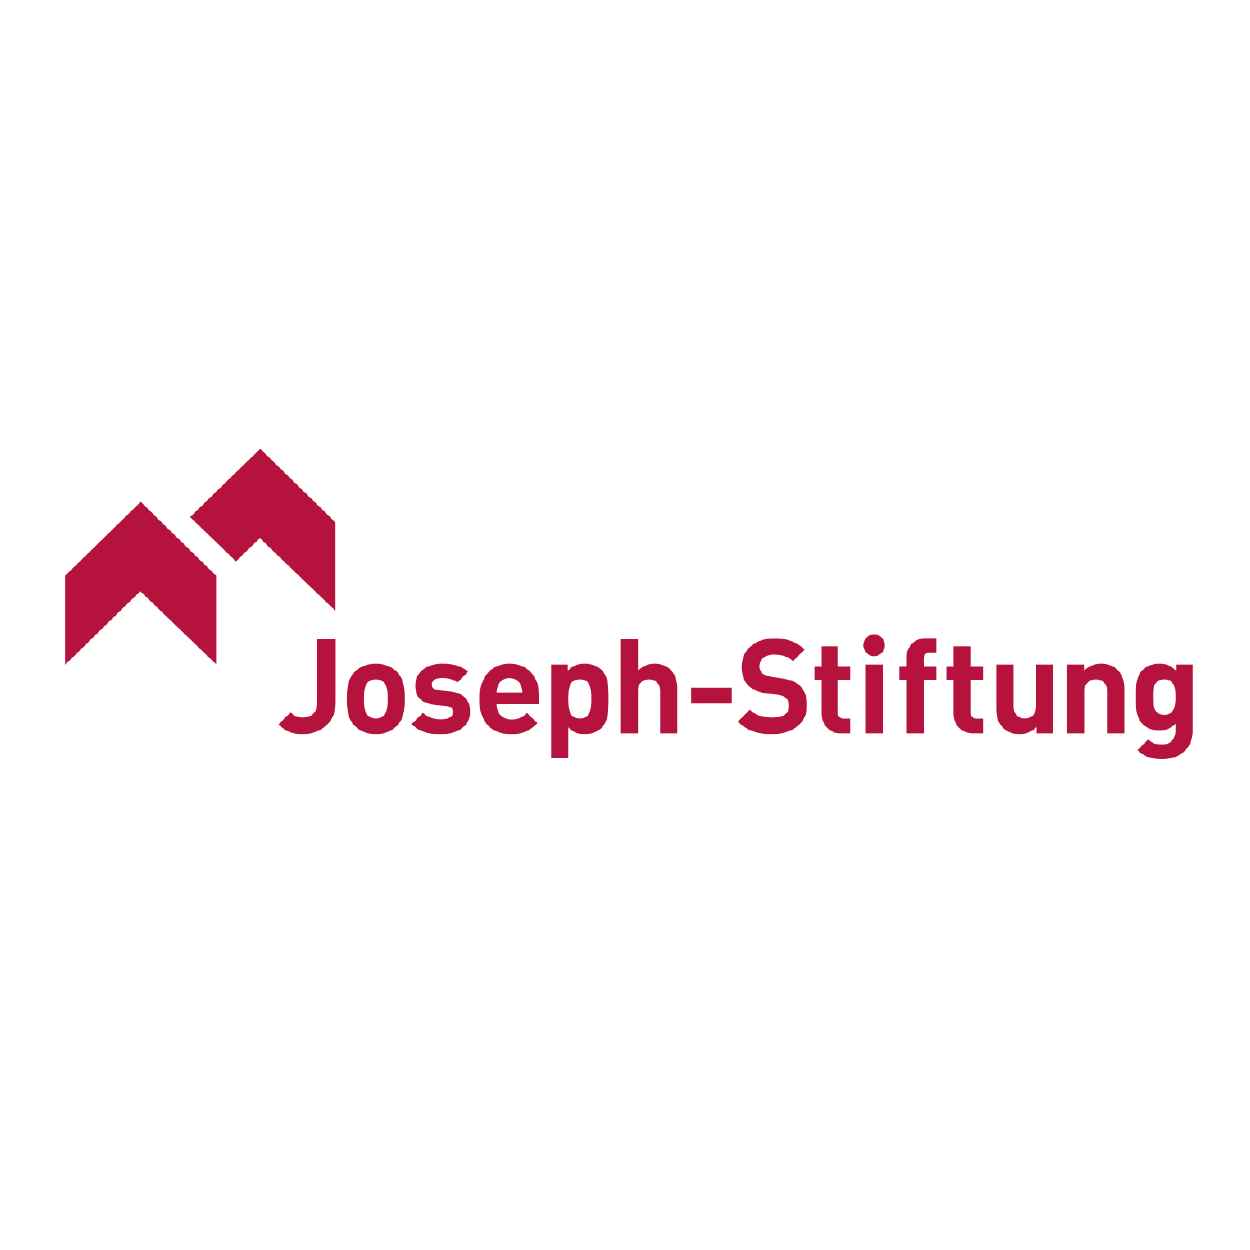 Reference Joseph-Stiftung